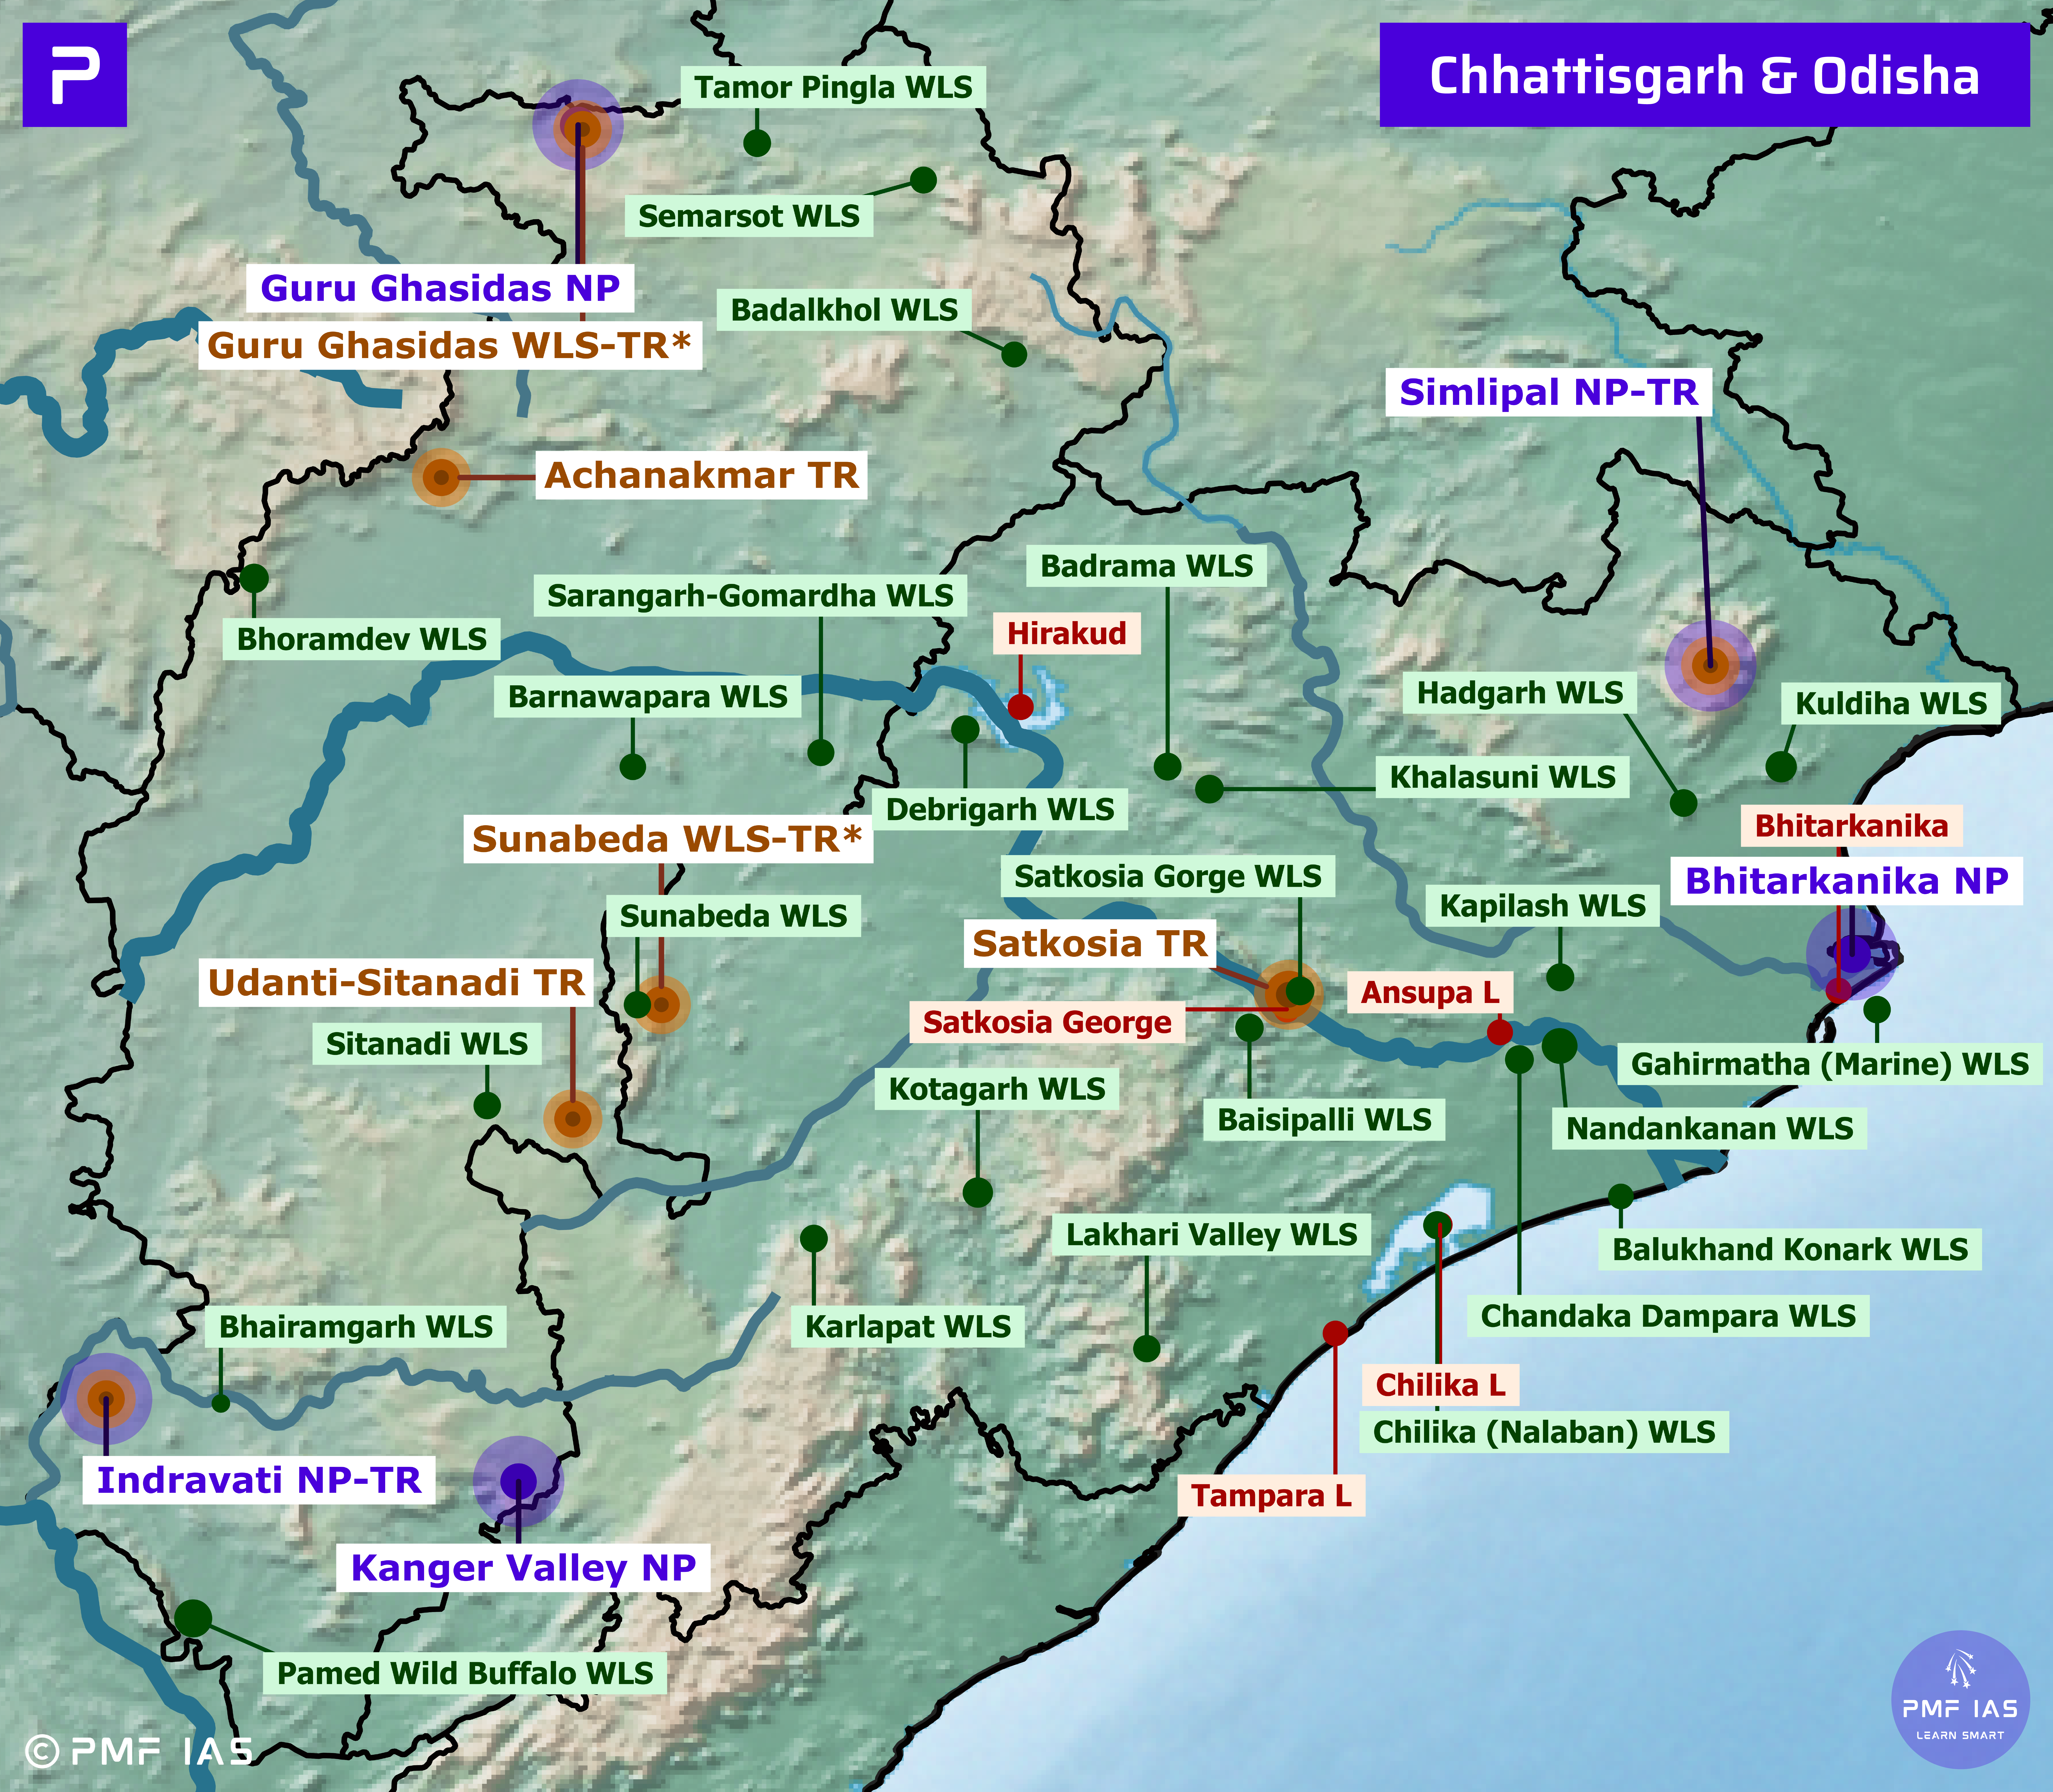 National Parks Tiger Reserves Wildlife Sanctuaries of Odisha Chhattisgarh